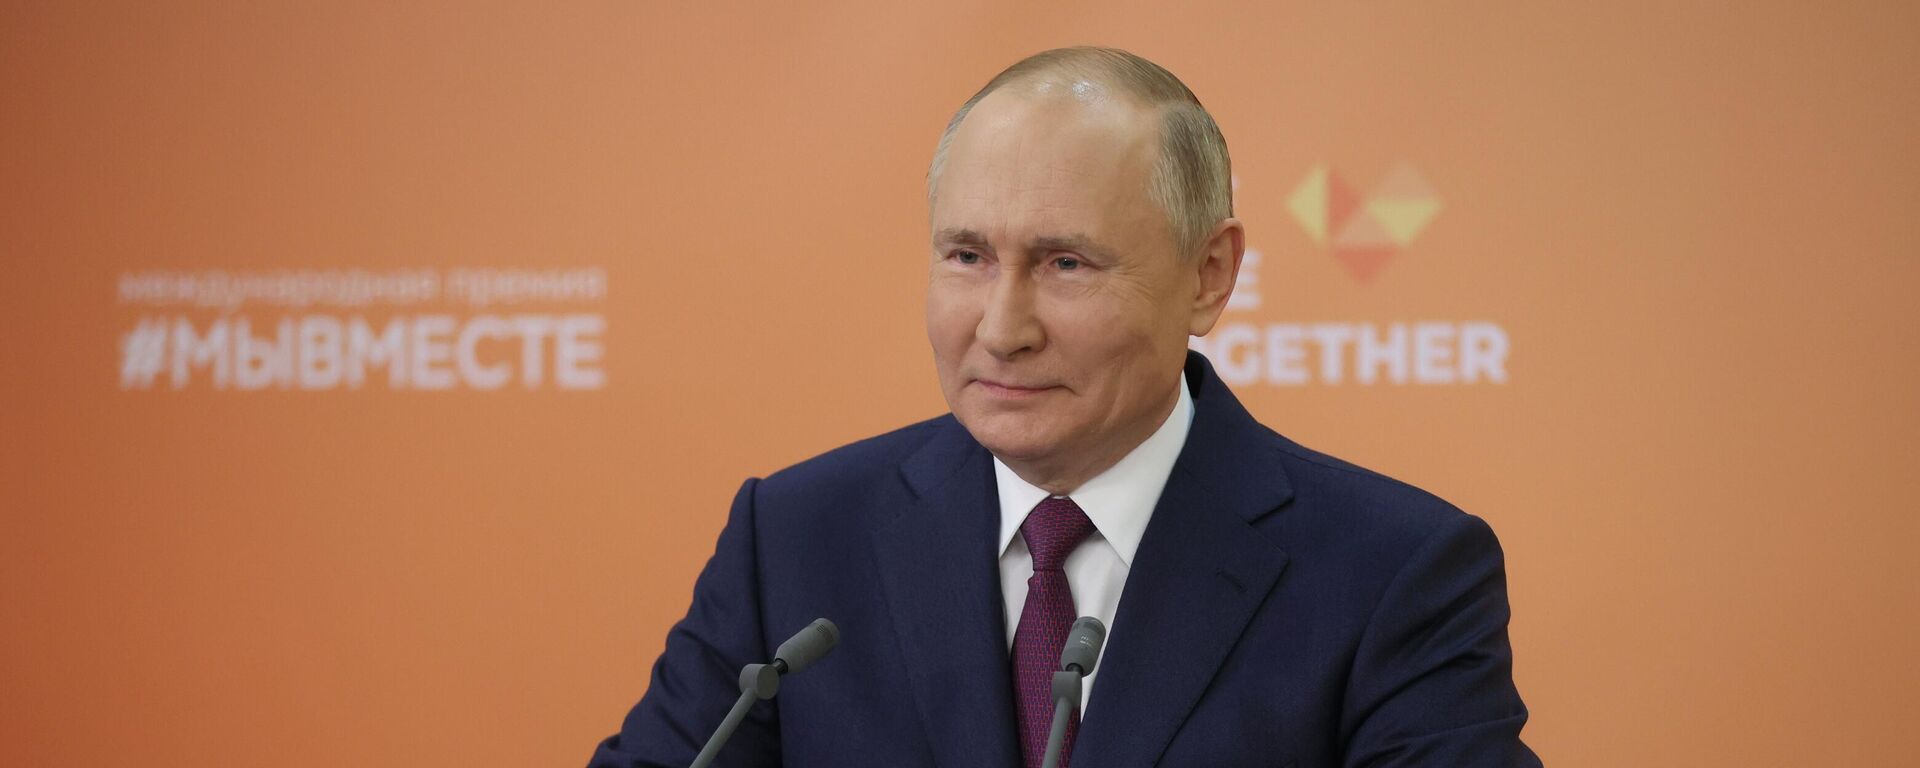 Vladimir Putin, presidente da Rússia, participa de cerimônia por videoconferência em Moscou, Rússia, 5 de dezembro de 2021 - Sputnik Brasil, 1920, 05.12.2021